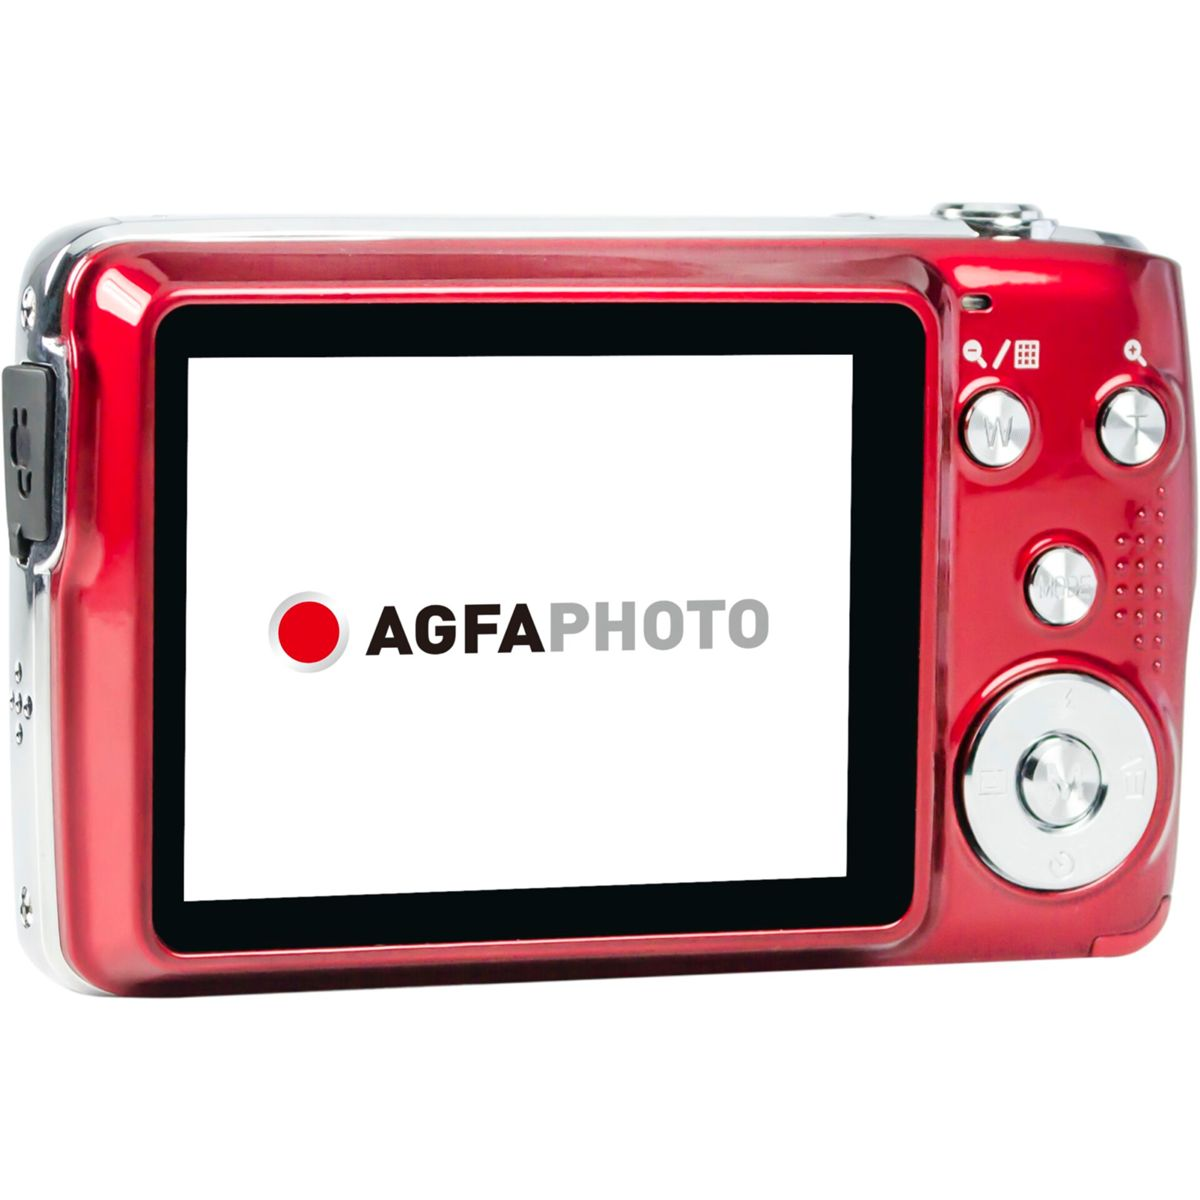 AGFAPHOTO Realishot DC8200 rot Digitalkamera rot